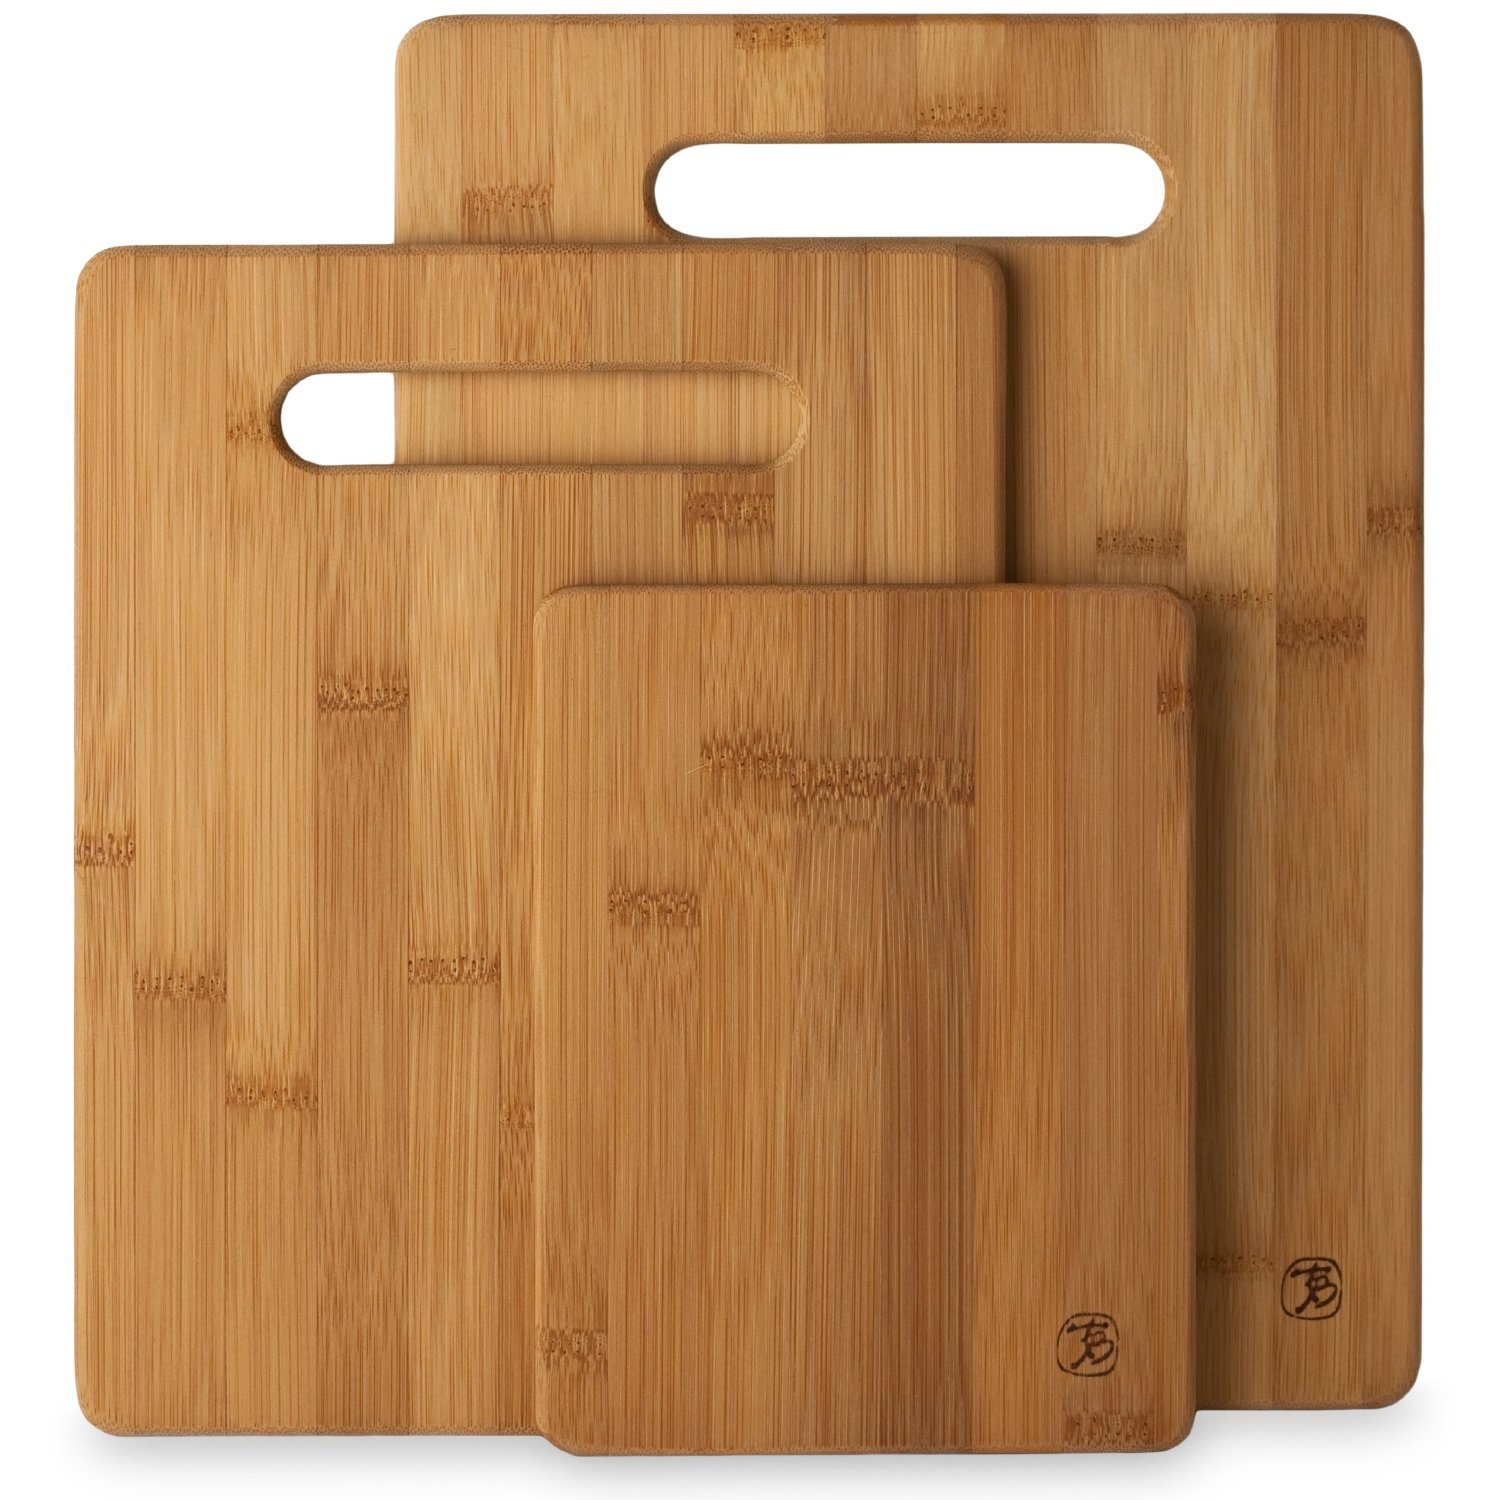 Three Piece Bamboo Cutting Board Set – Just $12.99!